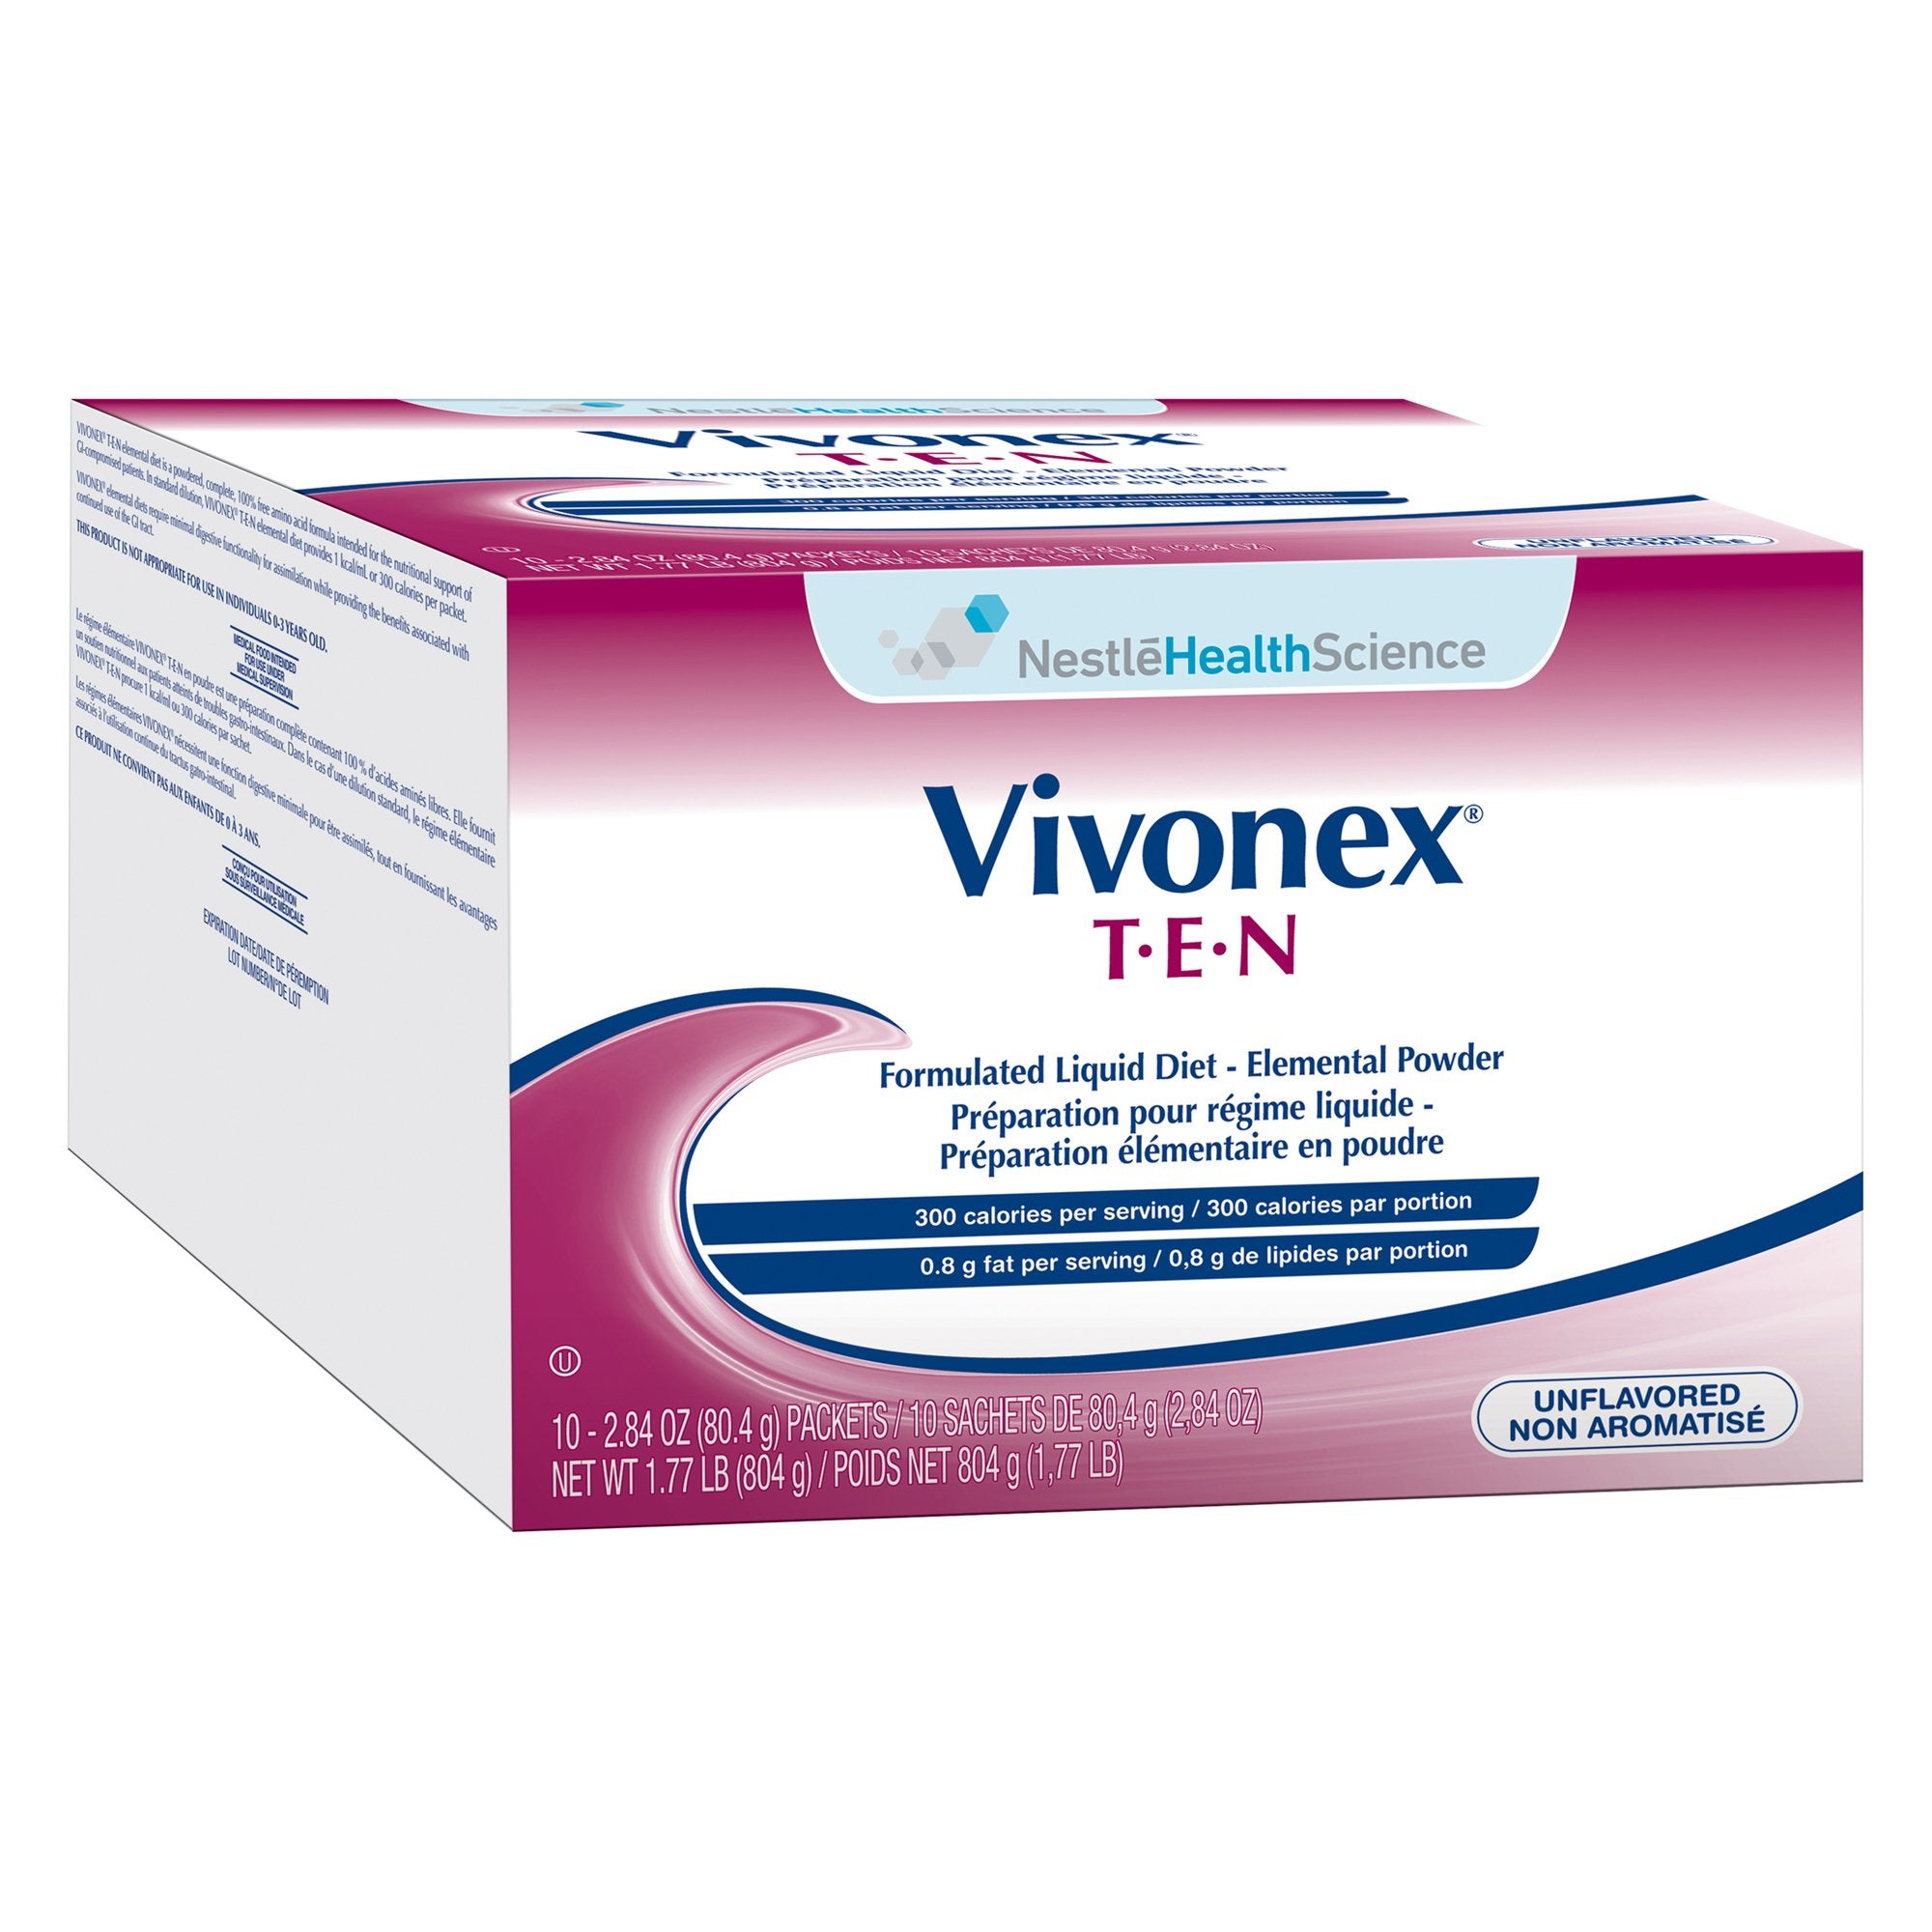 Vivonex T.E.N Elemental Powder, 2.84 oz. Packet -Box of 10